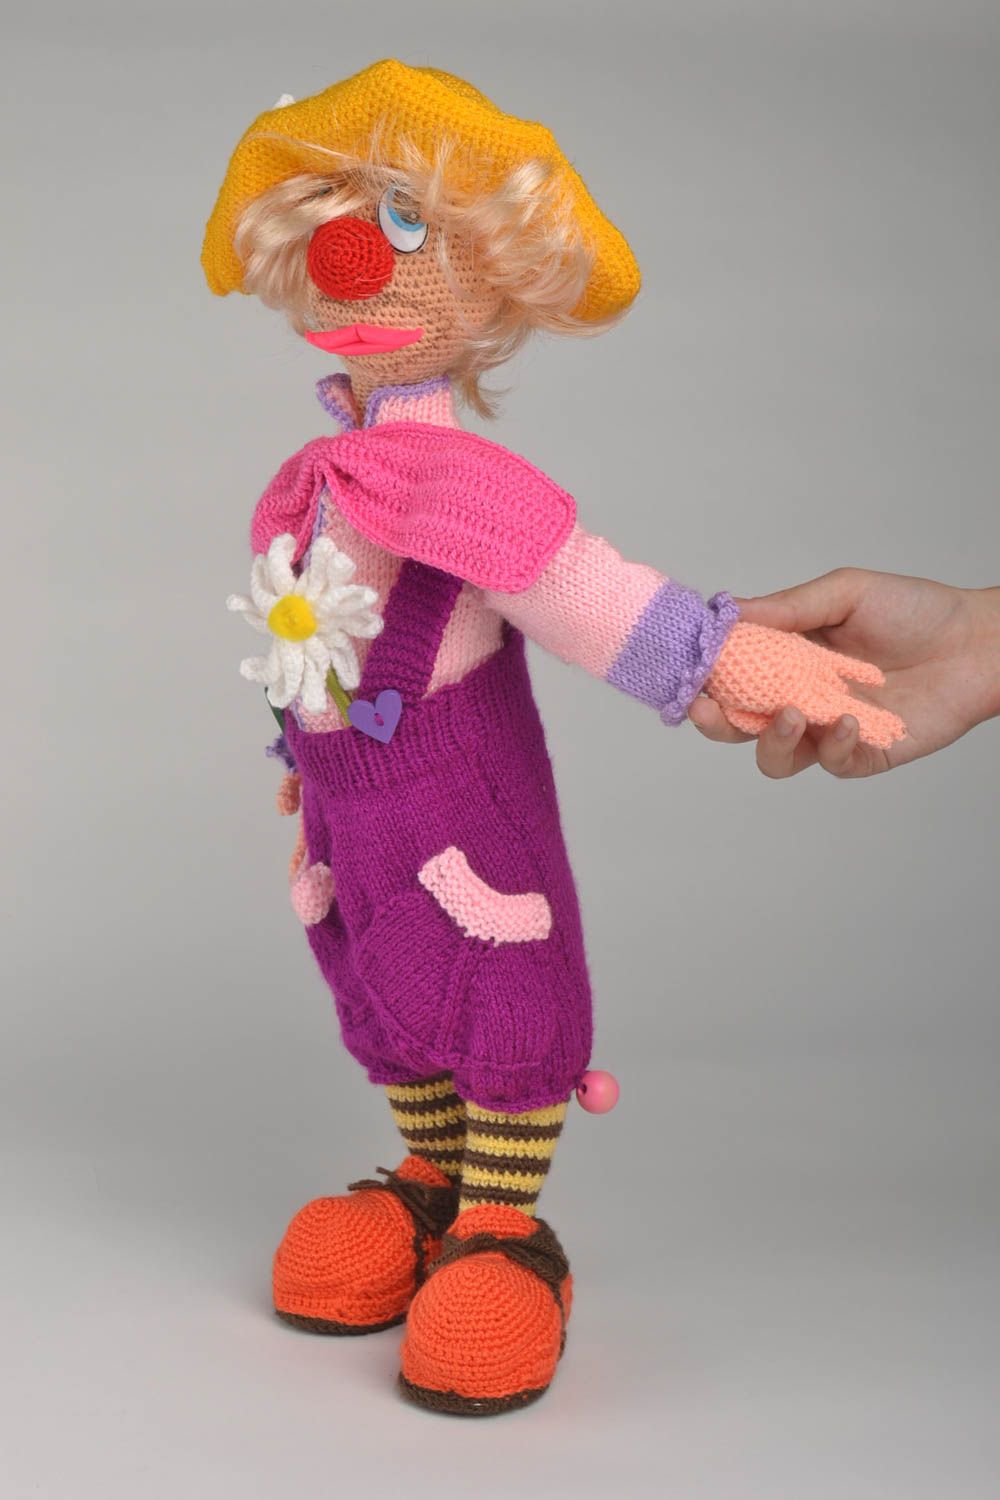 Unusual handmade crochet toy stuffed toy clown soft toy birthday gift ideas photo 5